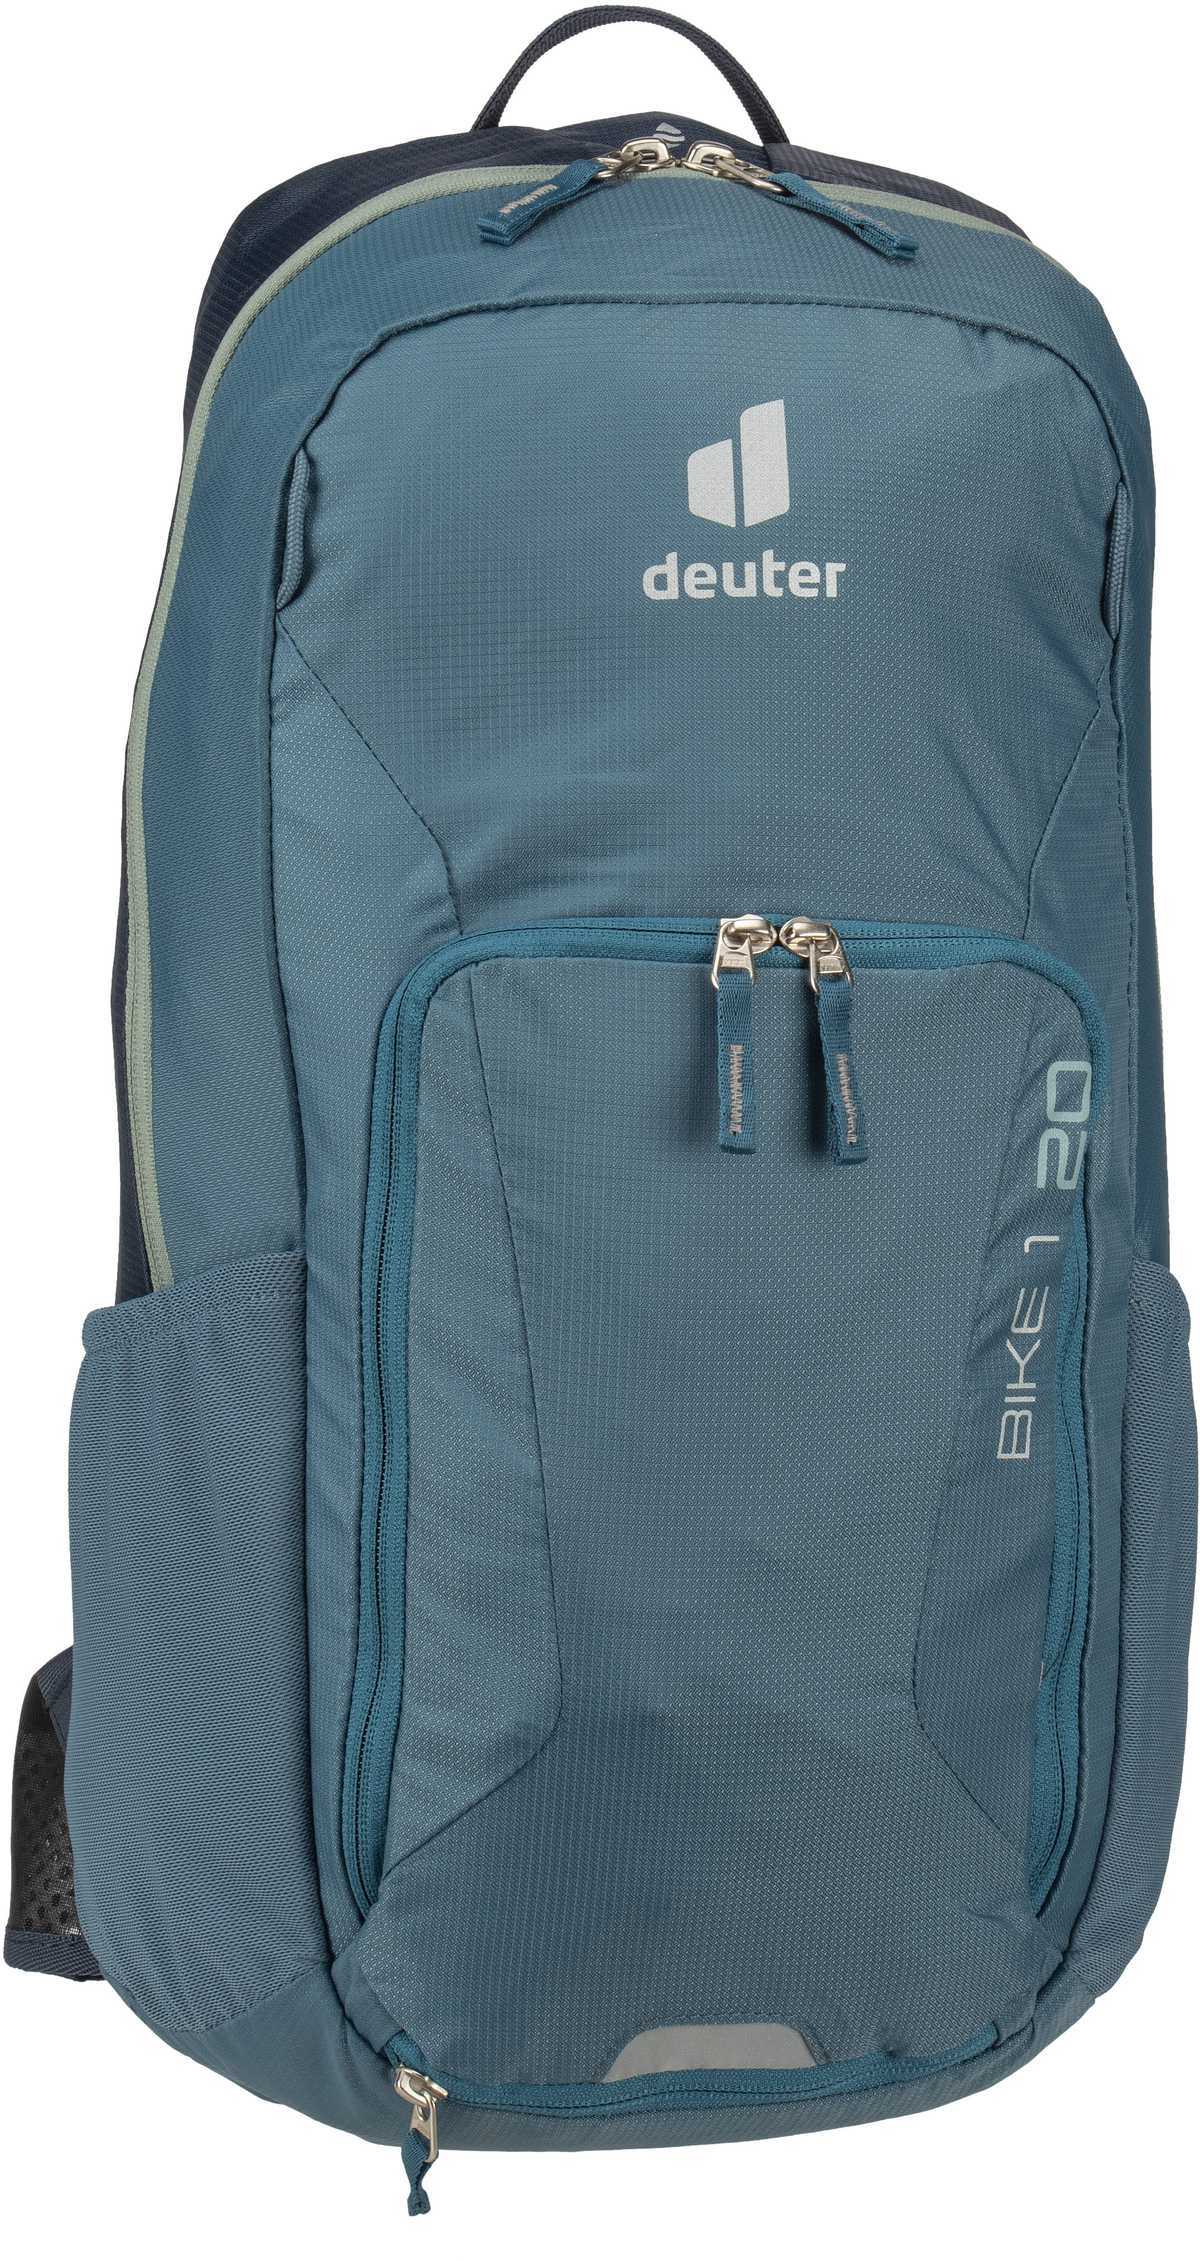 Deuter Bike I 20  in Blau (20 Liter), Rucksack / Backpack